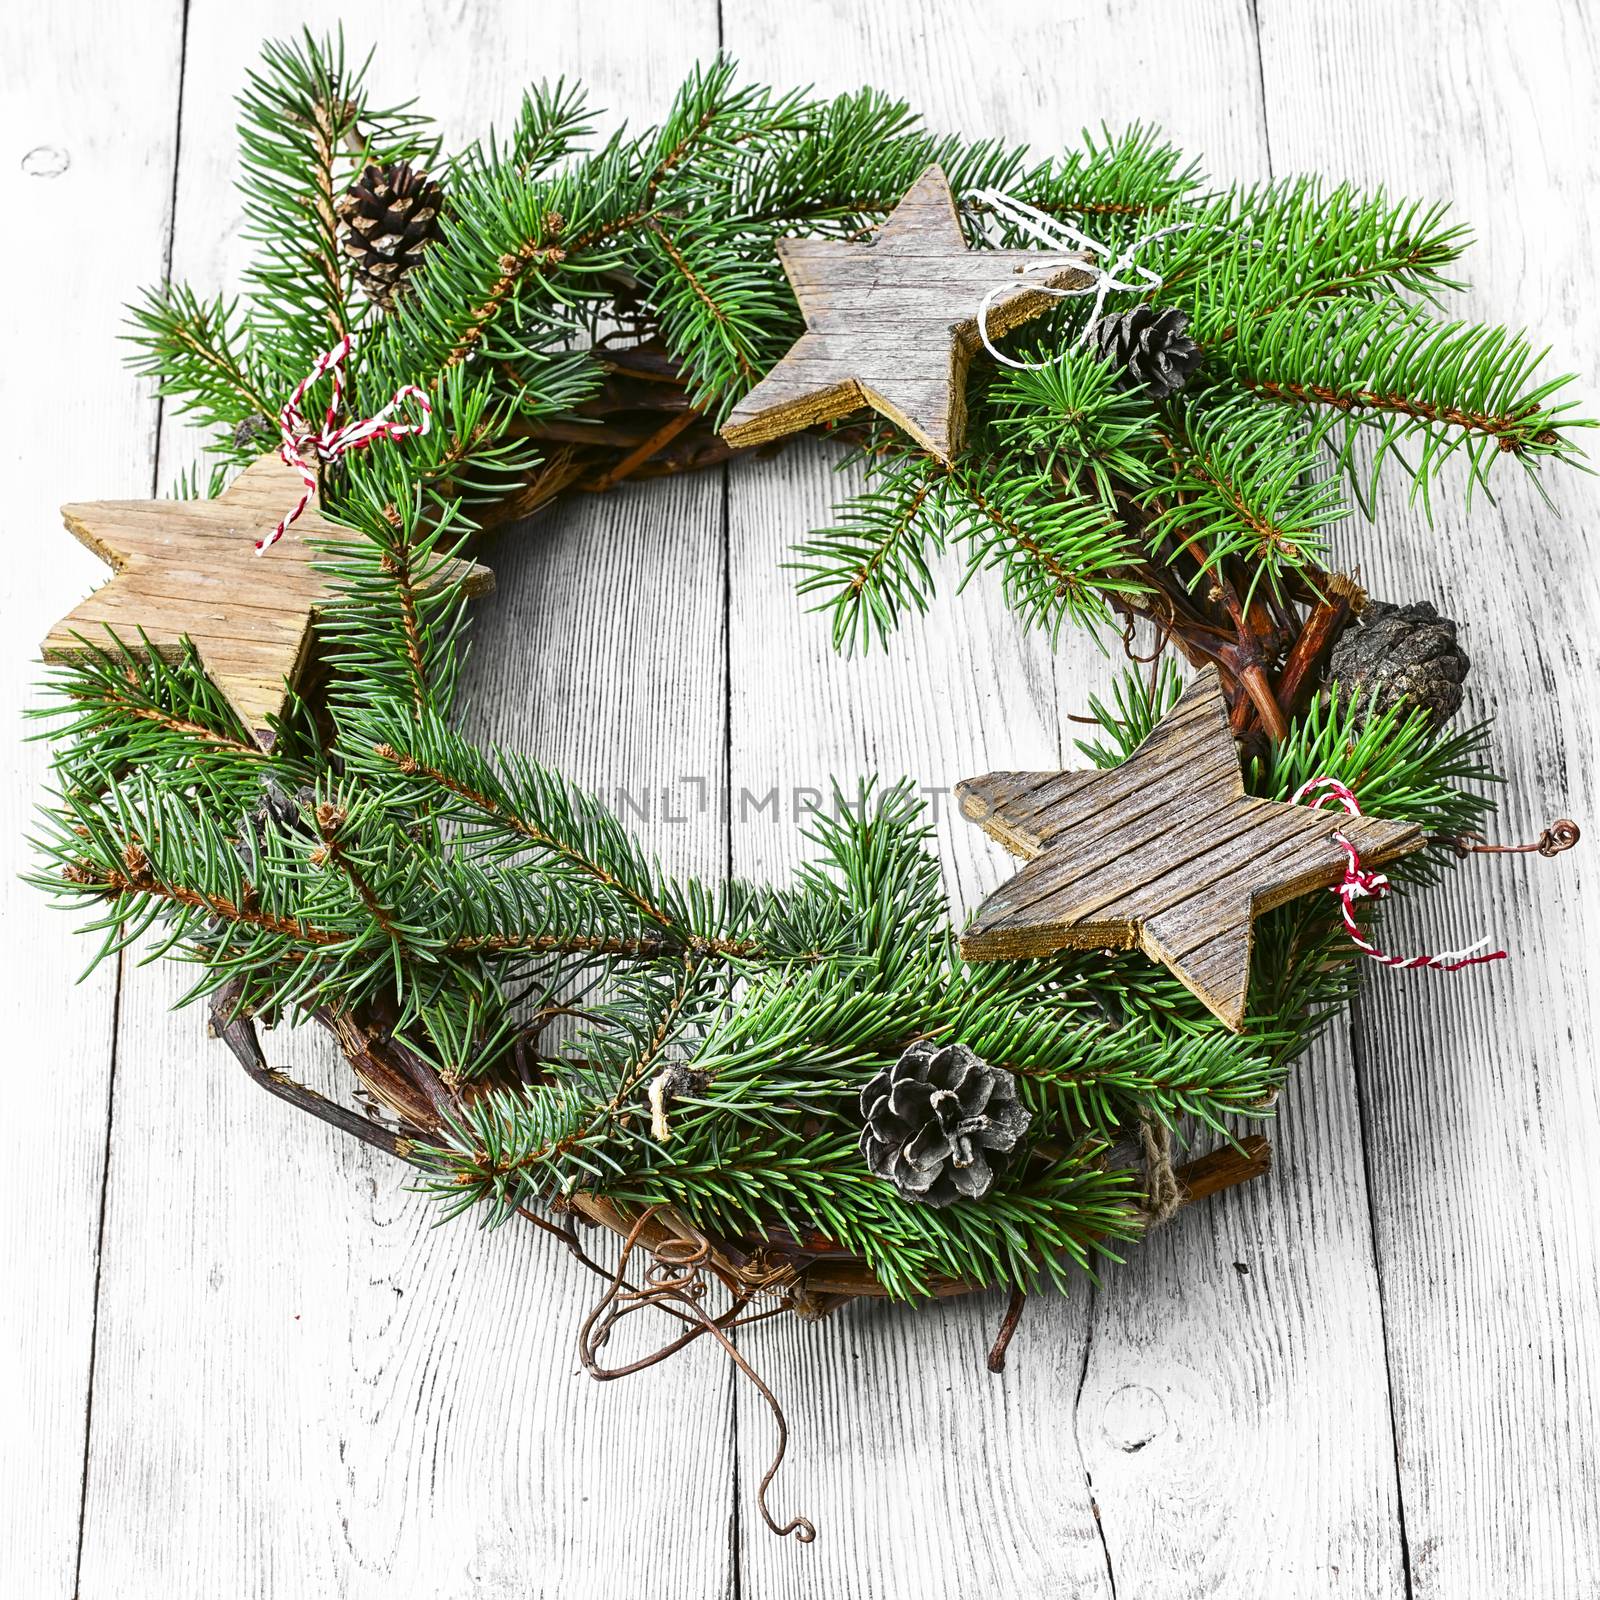 Xmas background with wreath Christmas by LMykola